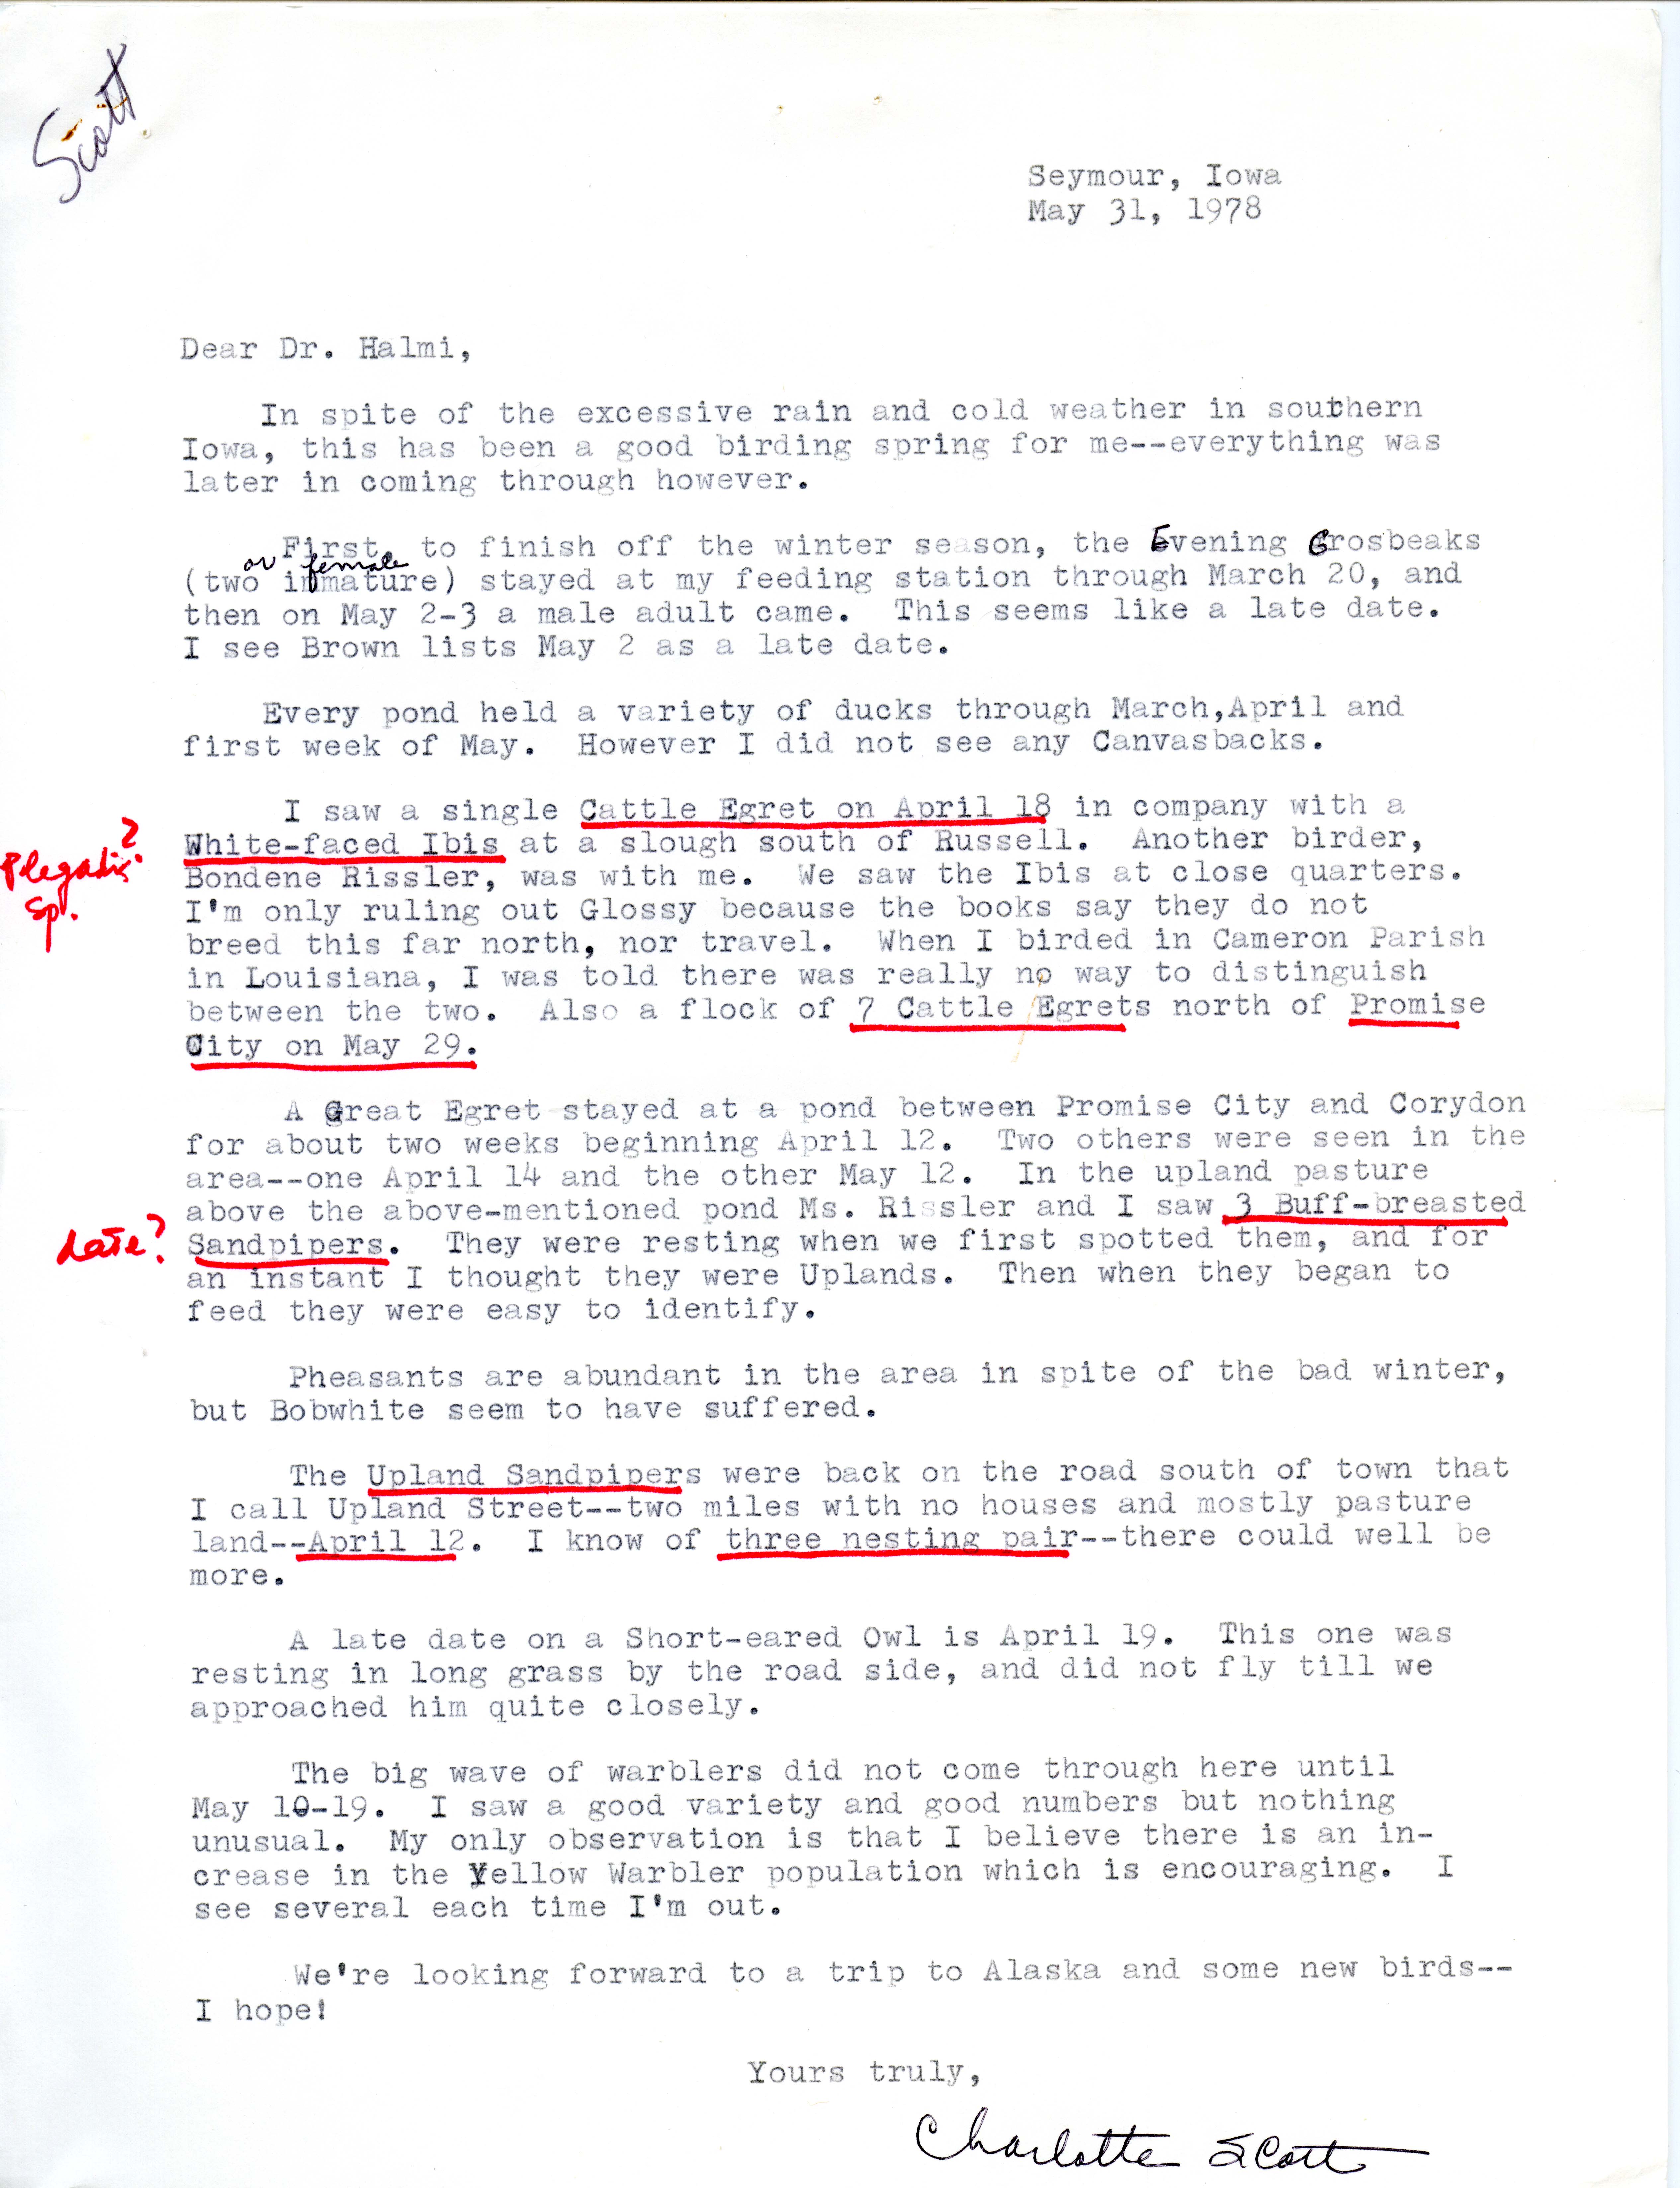 Charlotte Scott letter to Nicholas S. Halmi regarding bird sightings, May 31, 1978